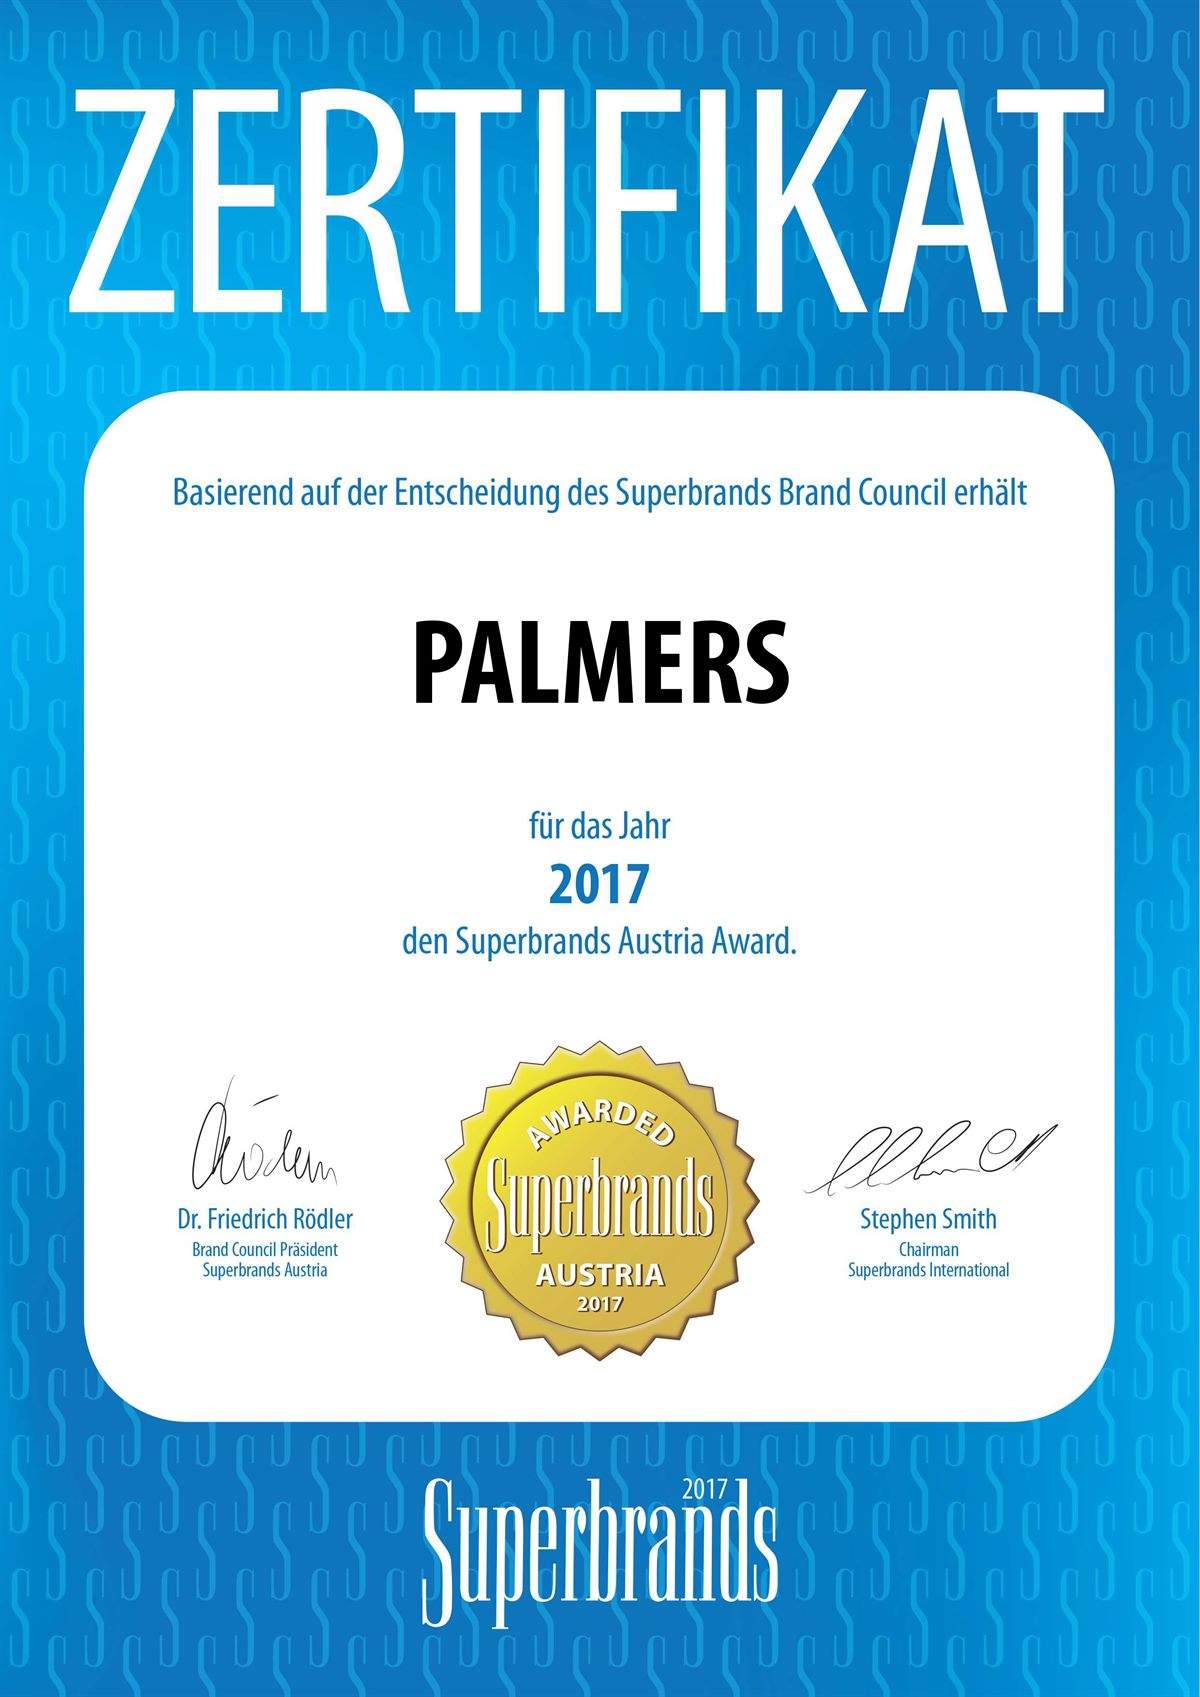 Superbrands_Zertifikat PALMERS